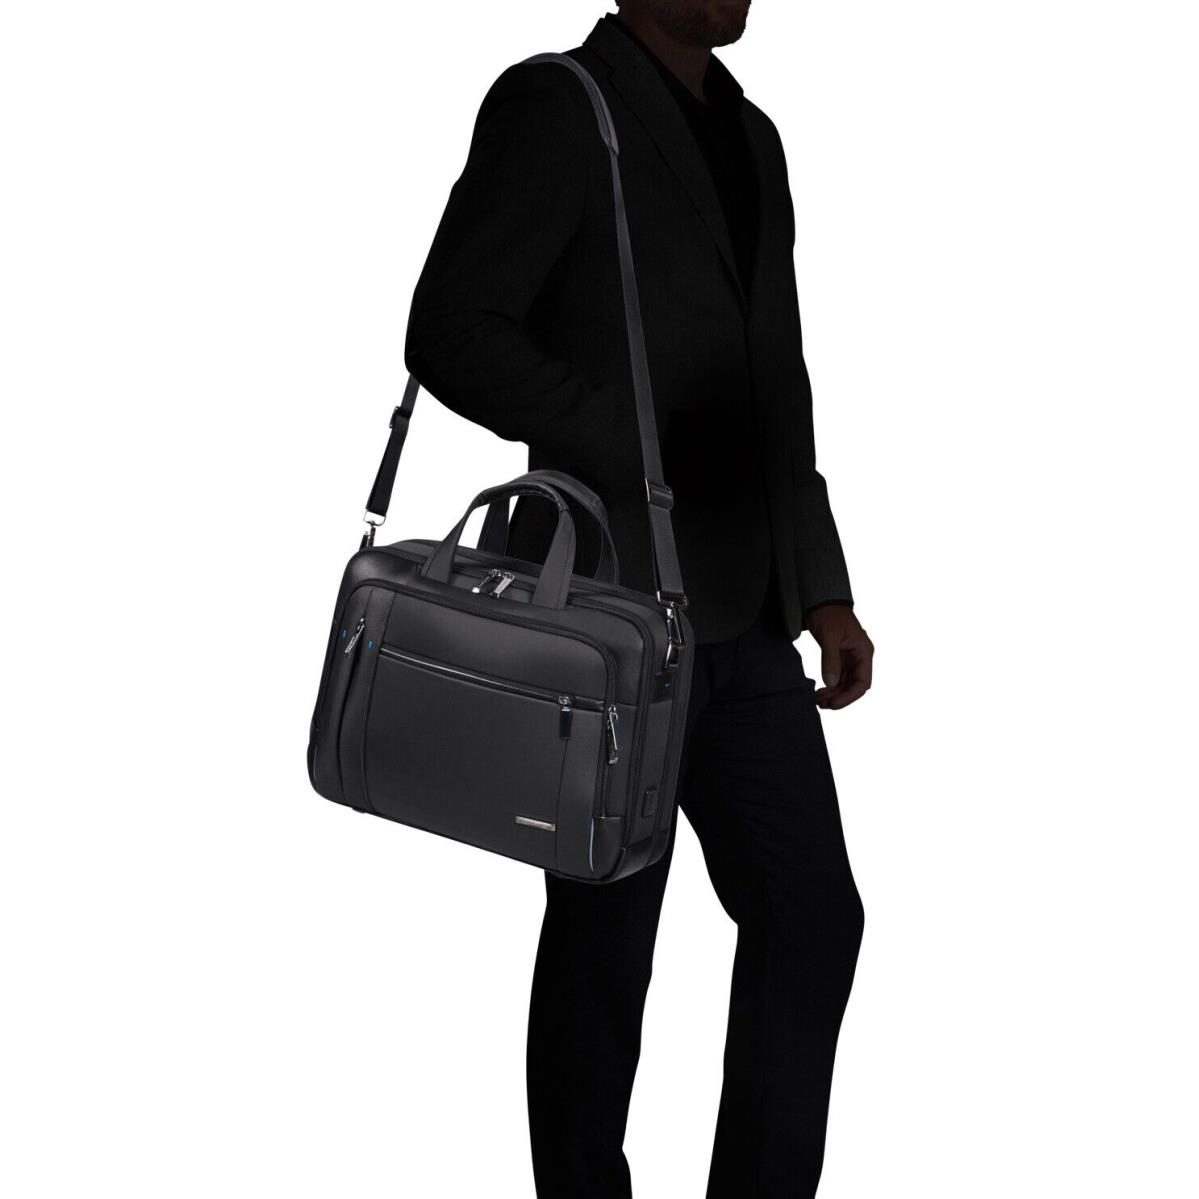 Samsonite Spectrolite Bailhandle 15.6 Exp Black Briefcase Laptop Travel Bag